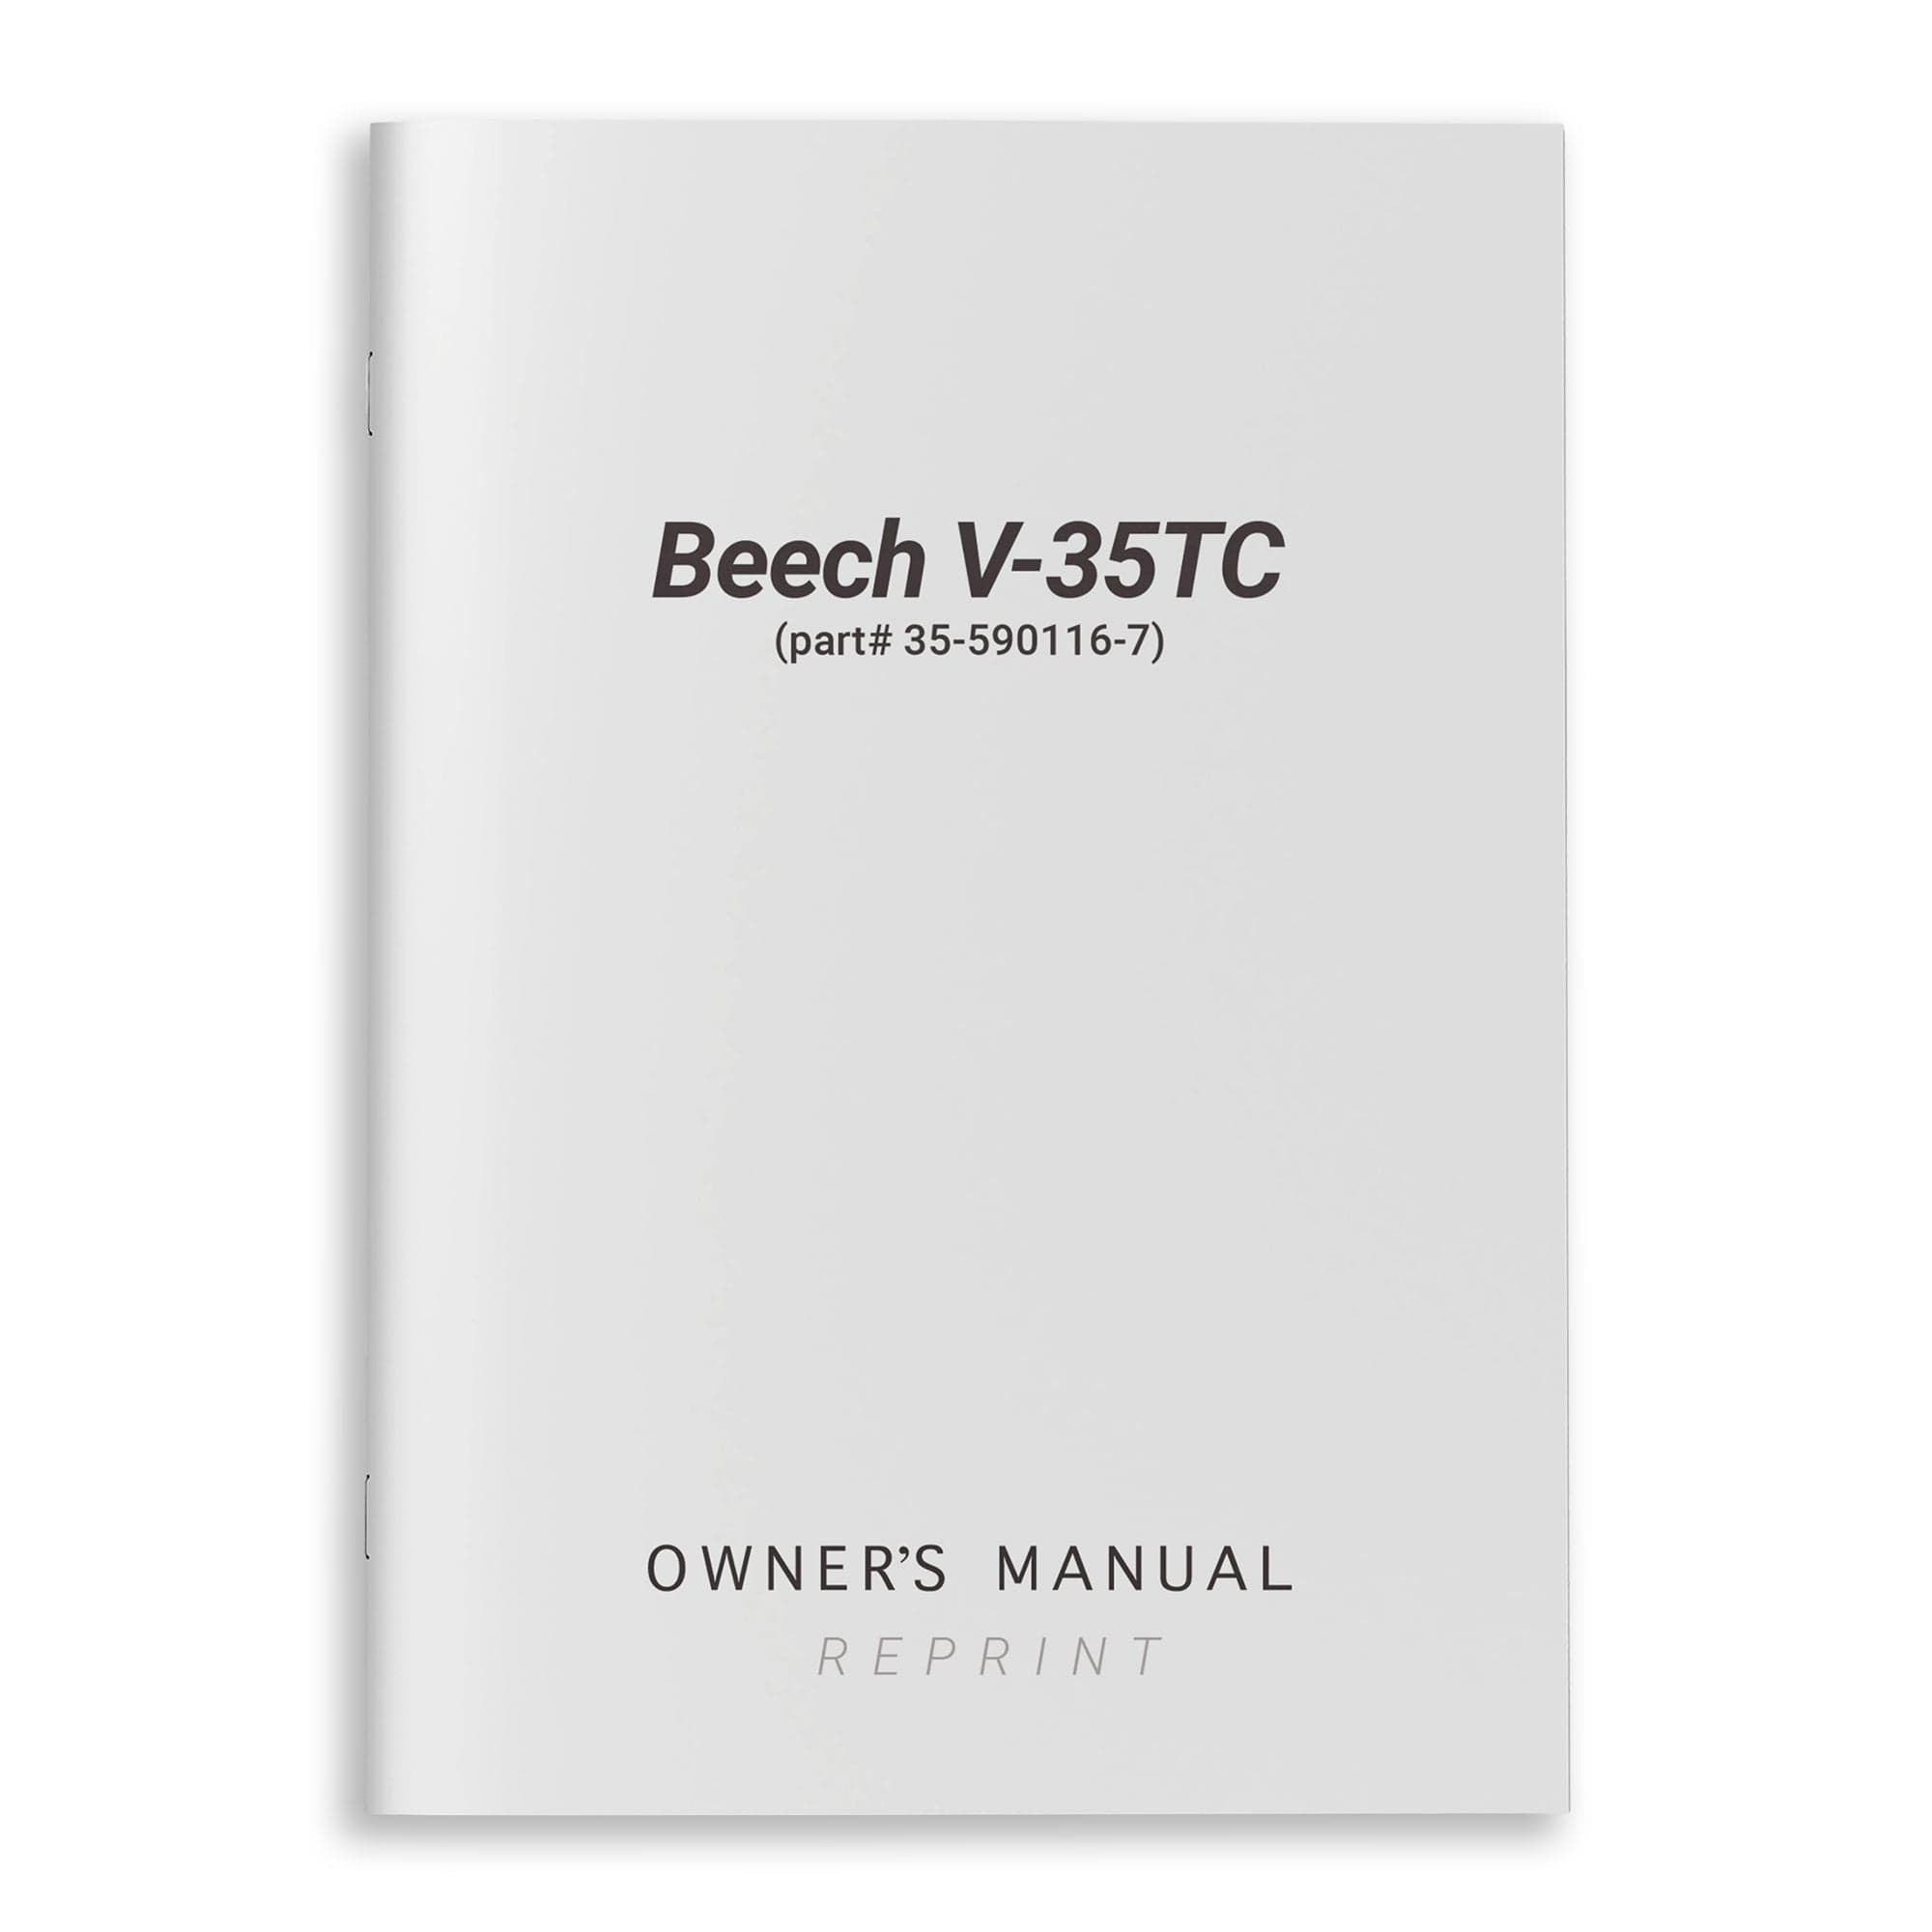 Beech V-35TC Owner's Manual (part# 35-590116-7)